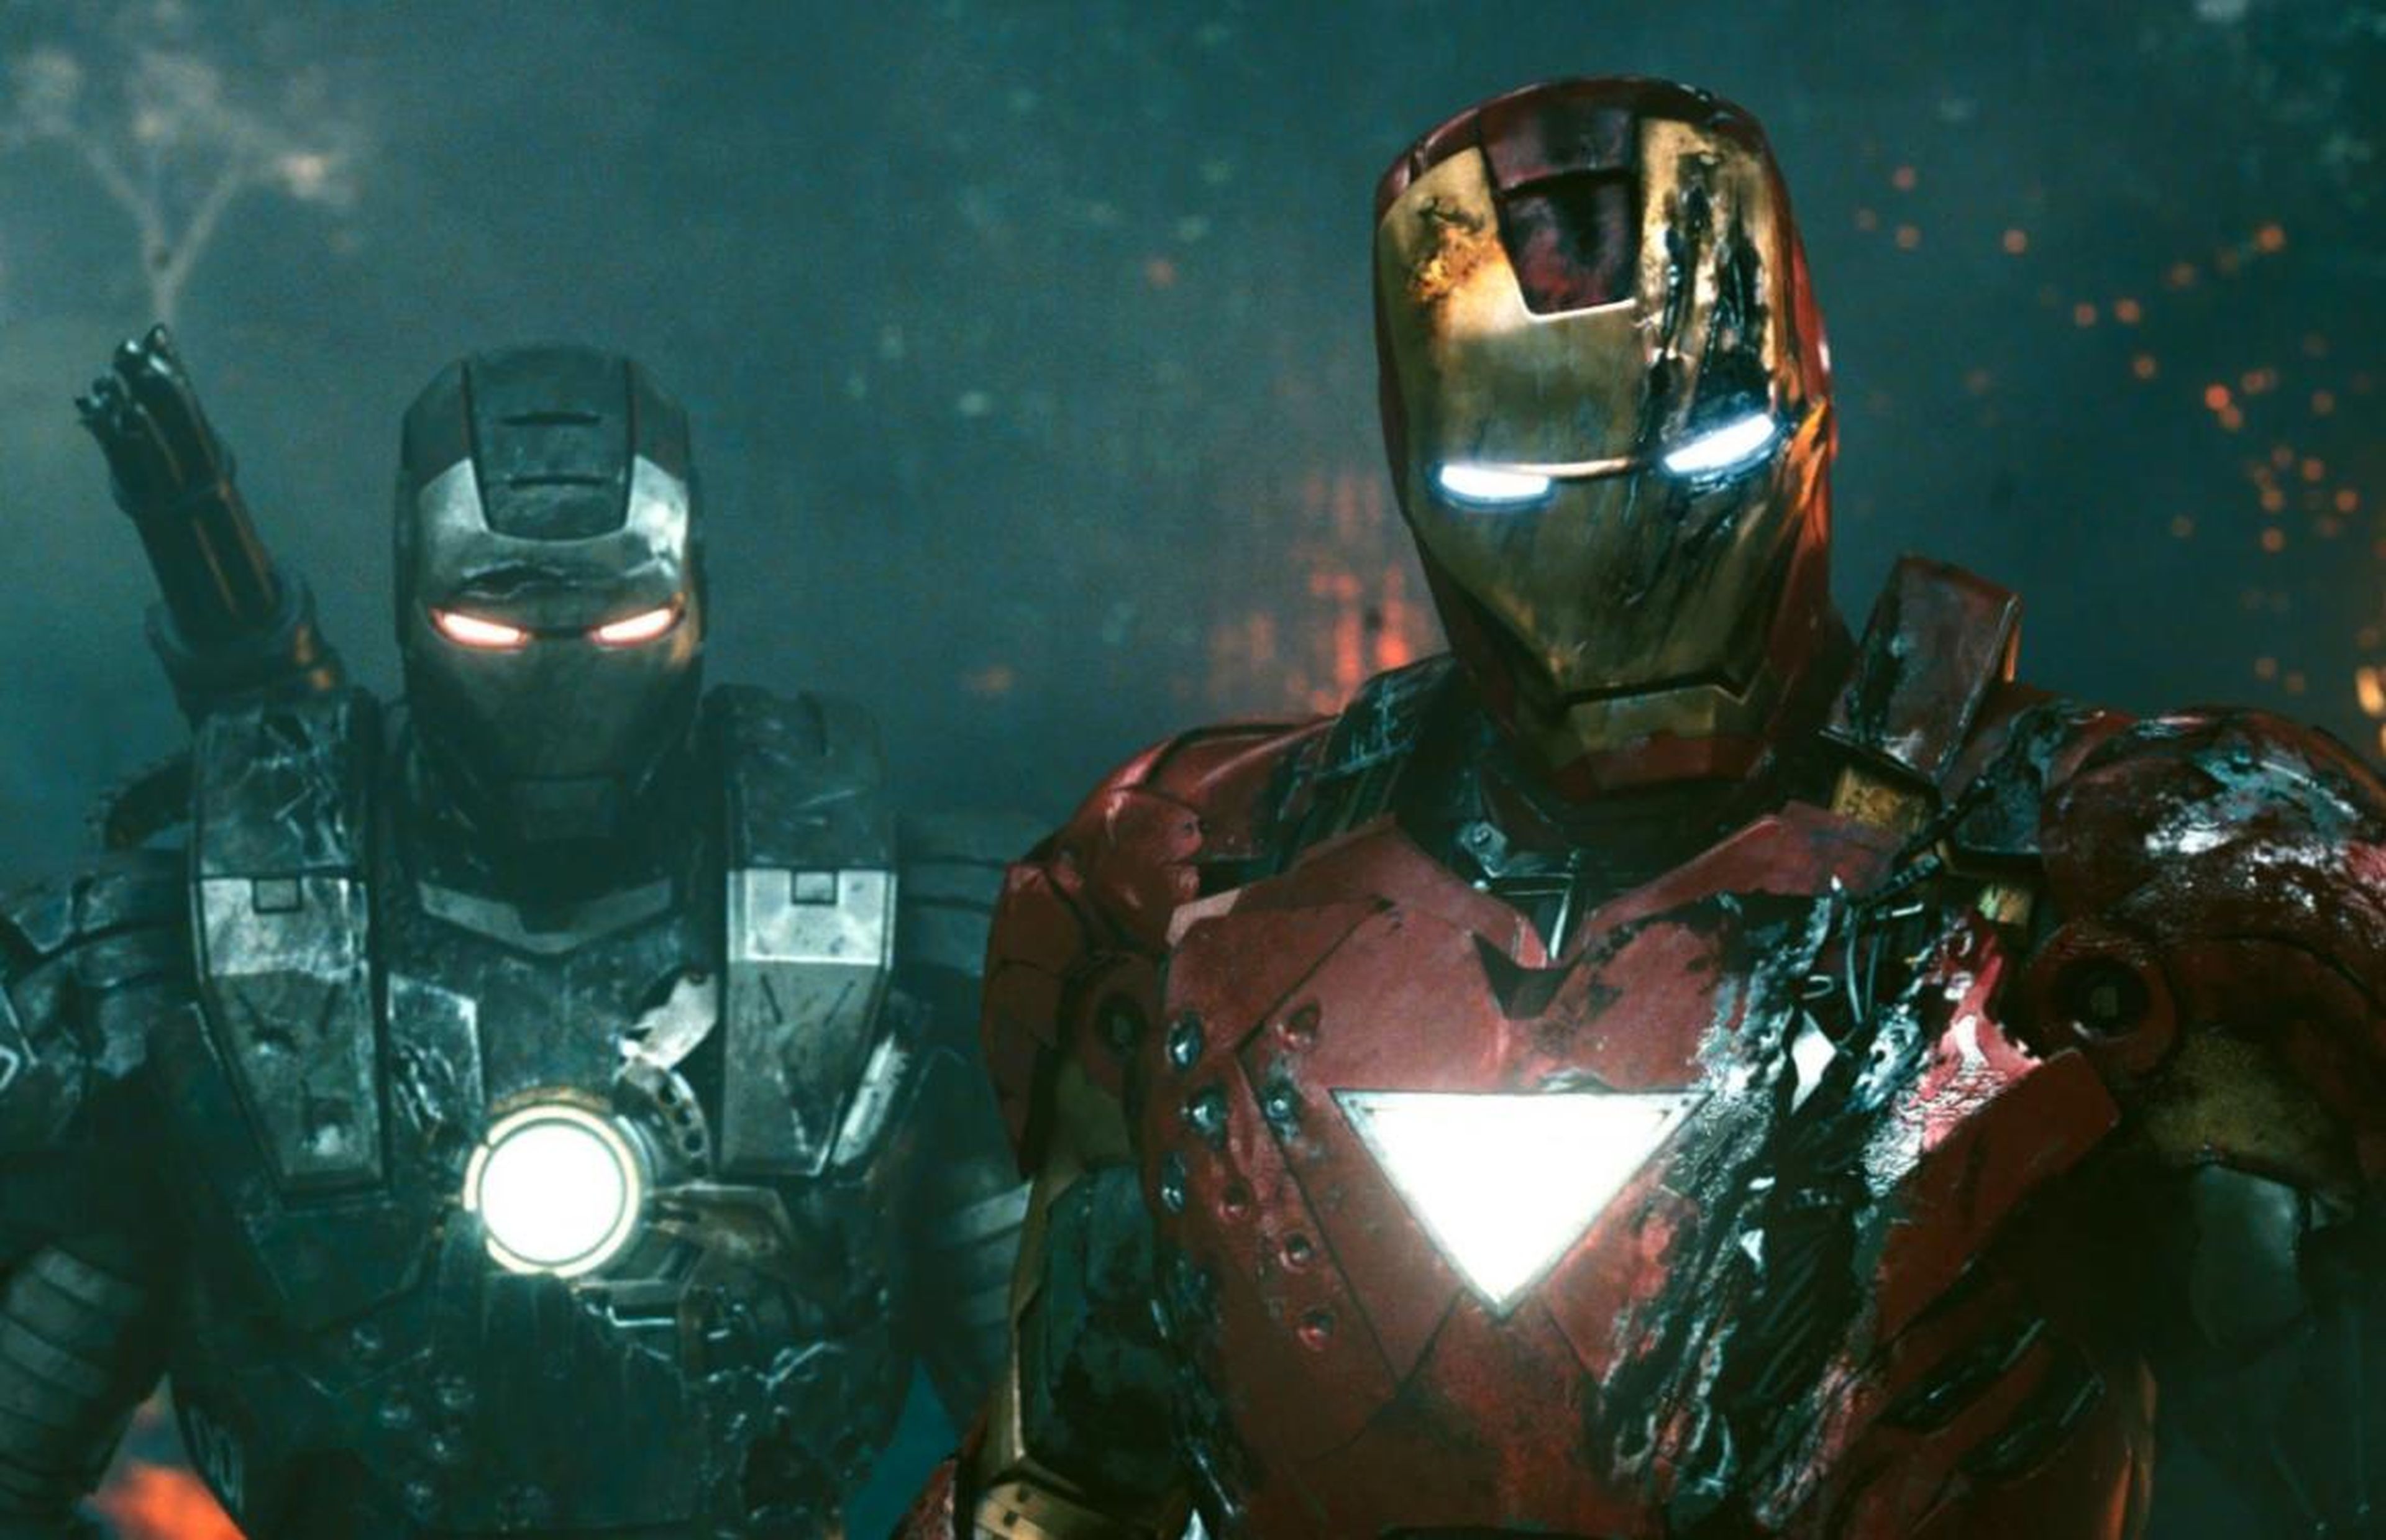 23. "Iron Man 2" (2010)